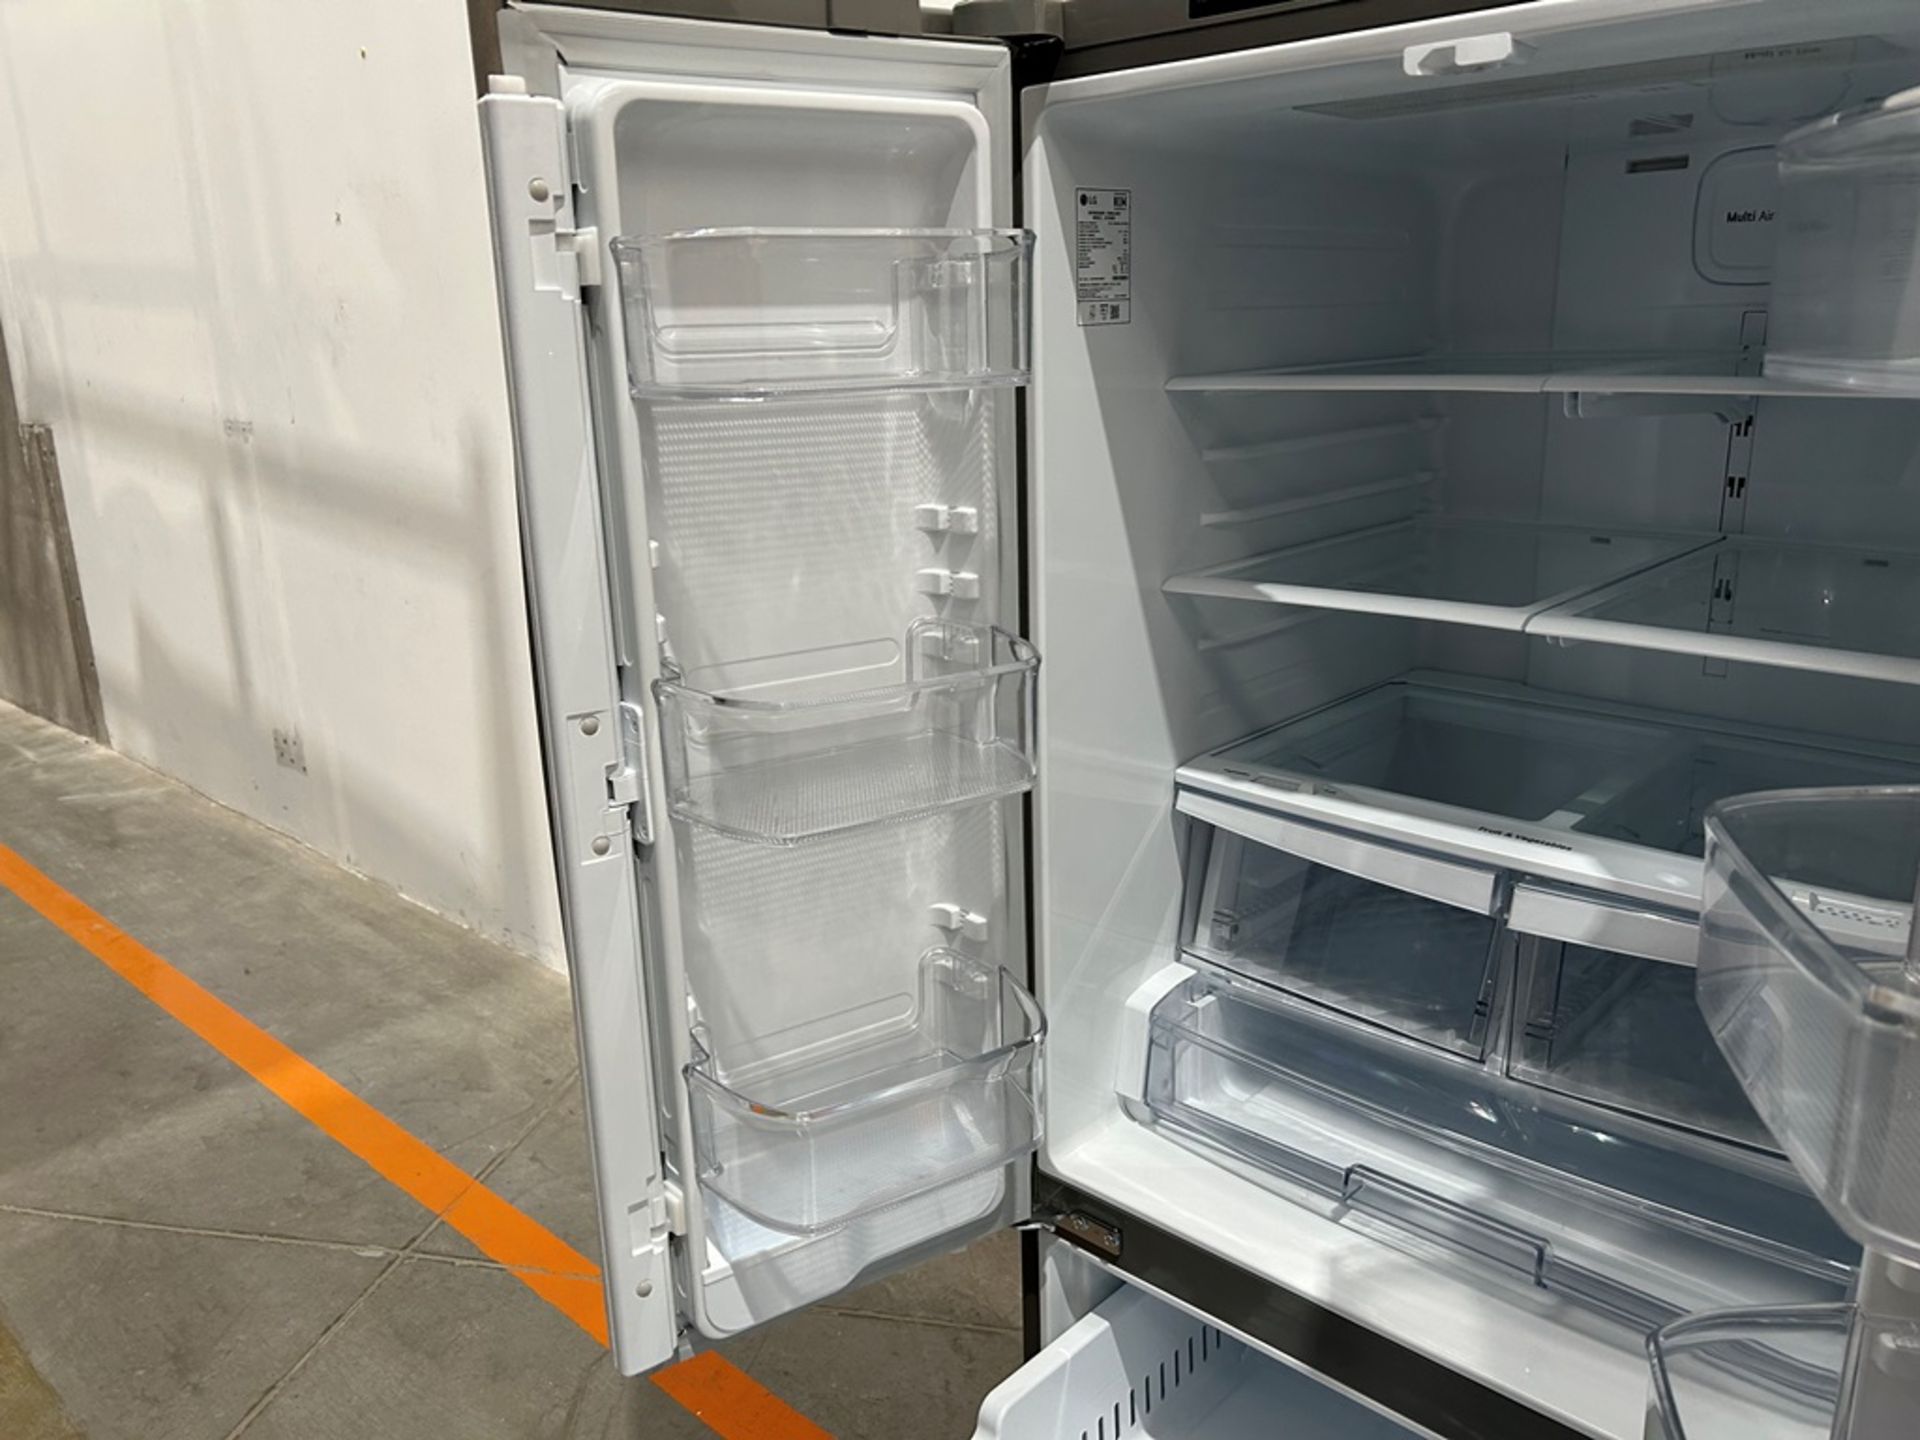 Refrigerador Marca LG, Modelo GF22BGSK, Serie 49652, Color GRIS (Favor de inspeccionar) - Image 6 of 11